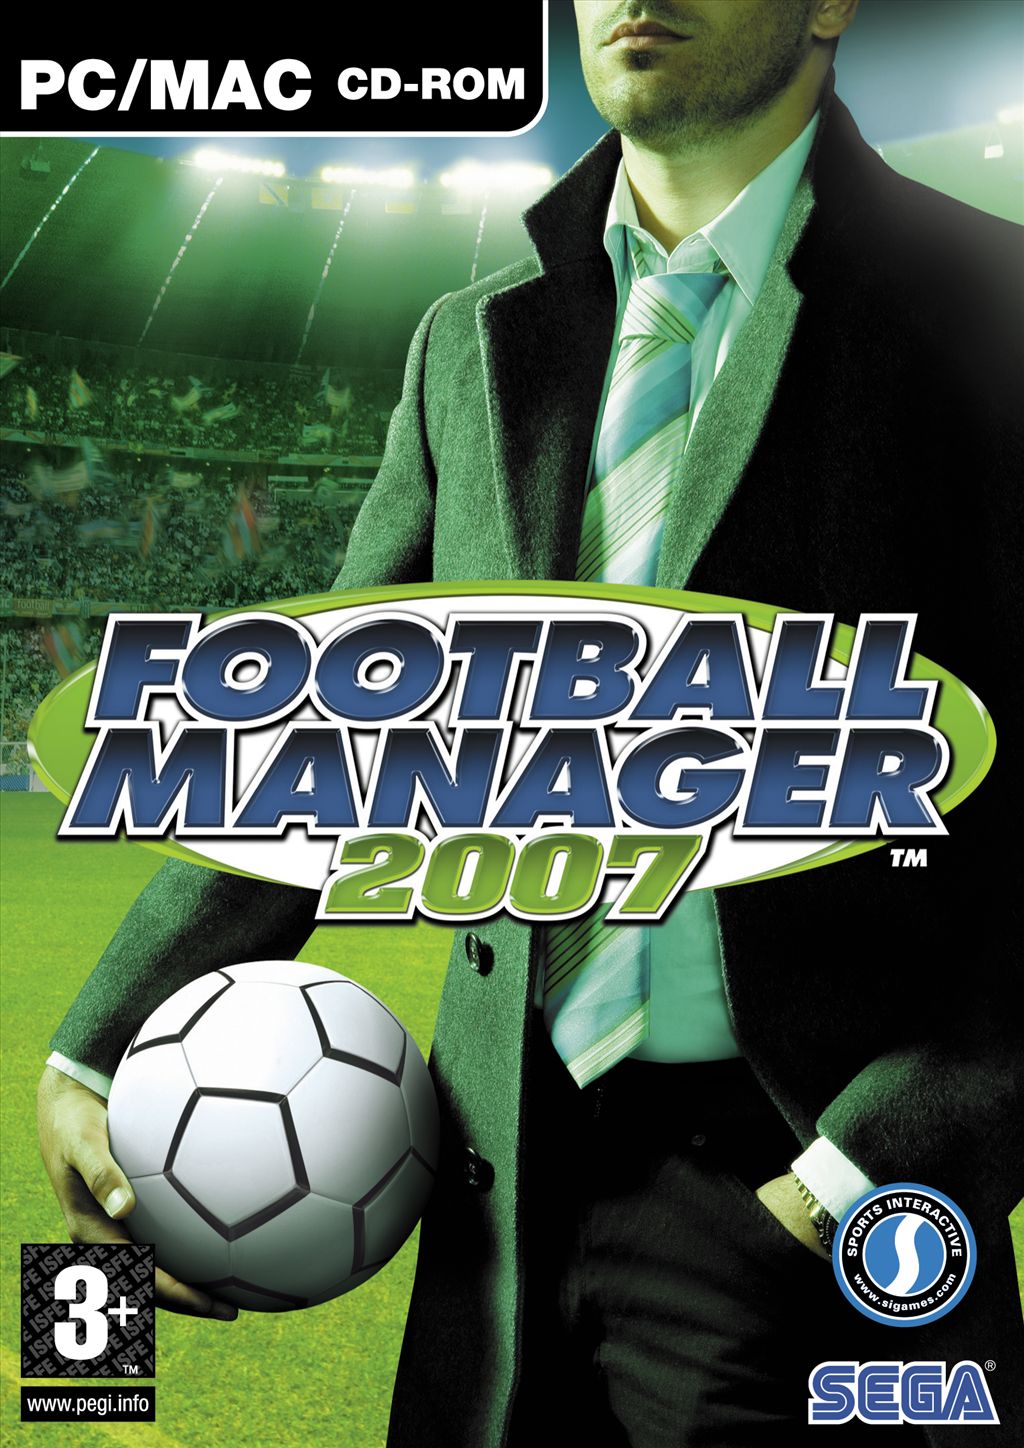 Descargar Football Manager 2007 por Torrent